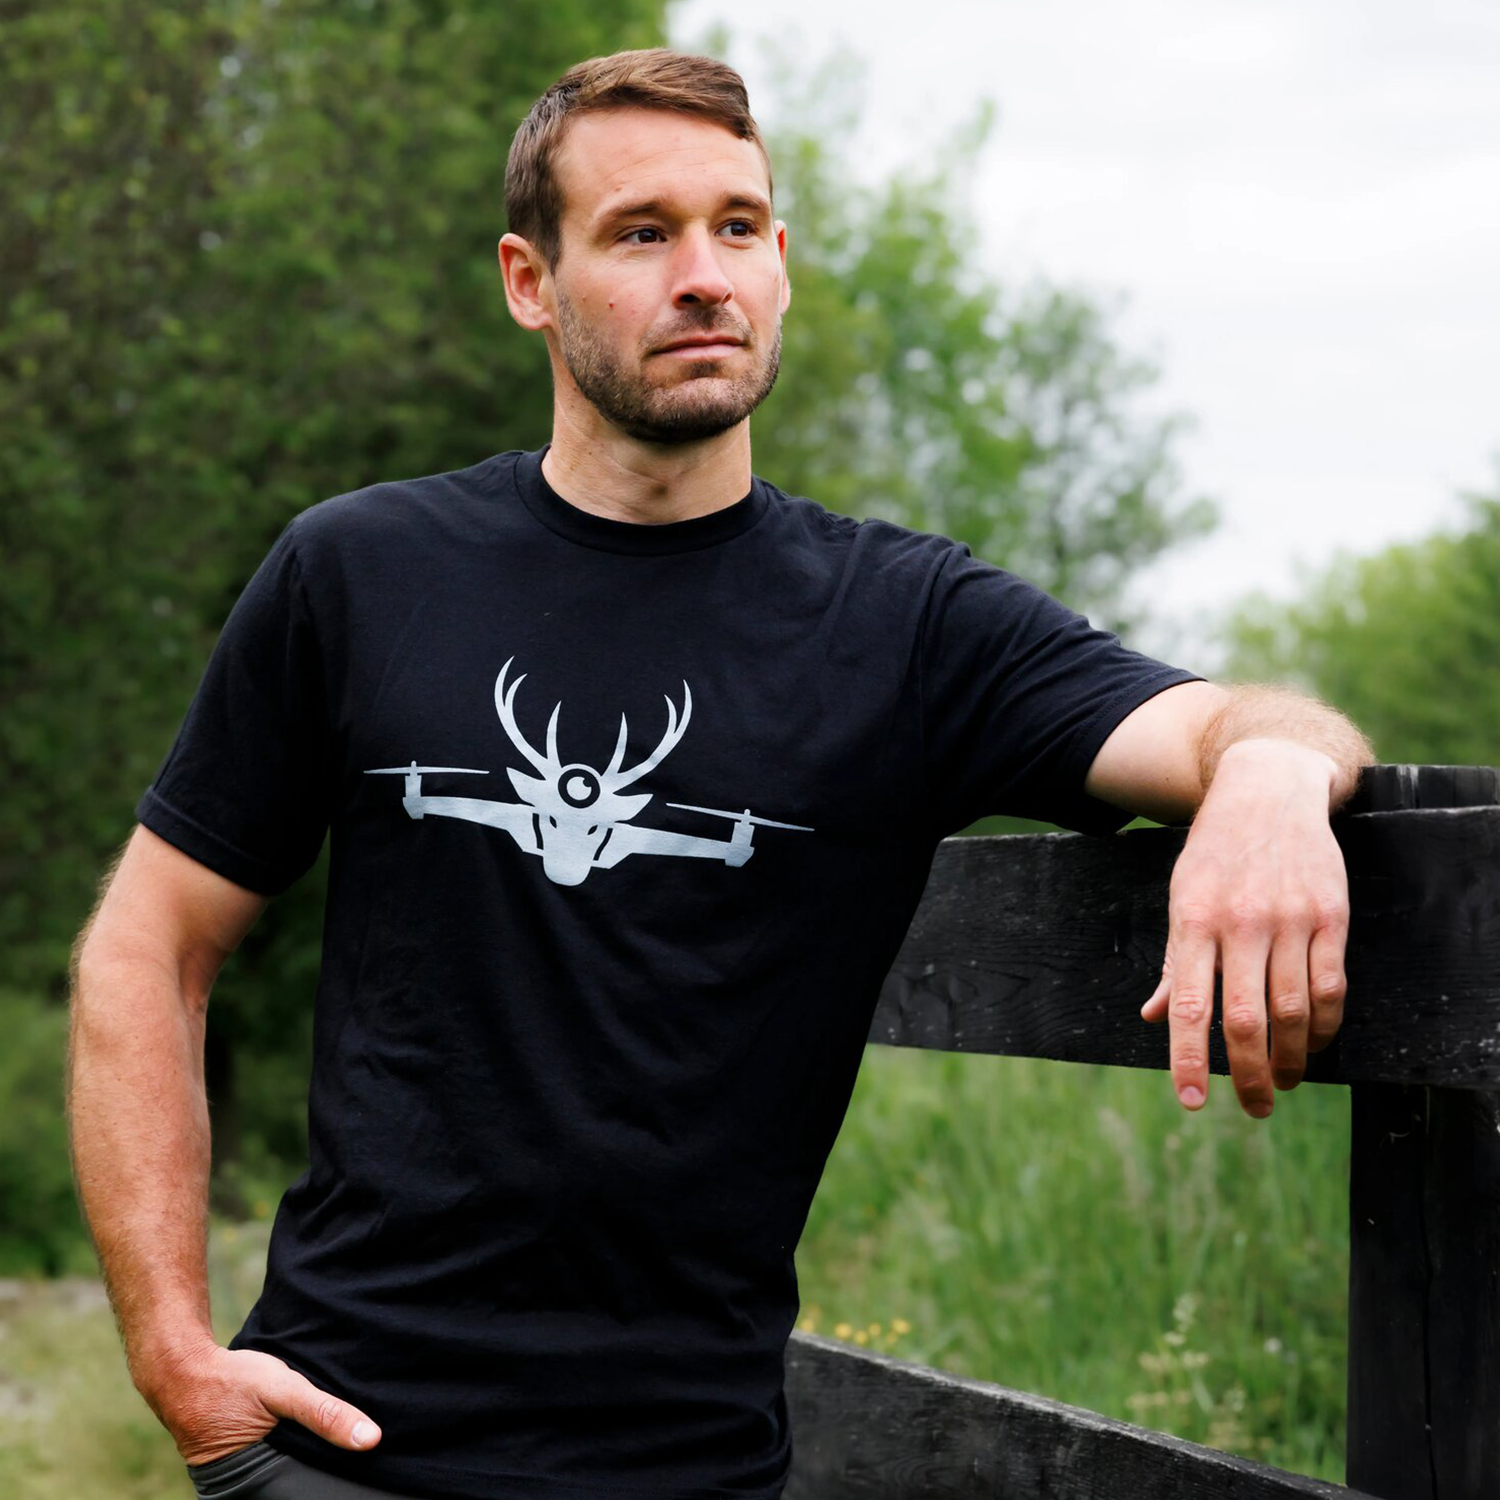 The "Drone Deer" T-Shirt